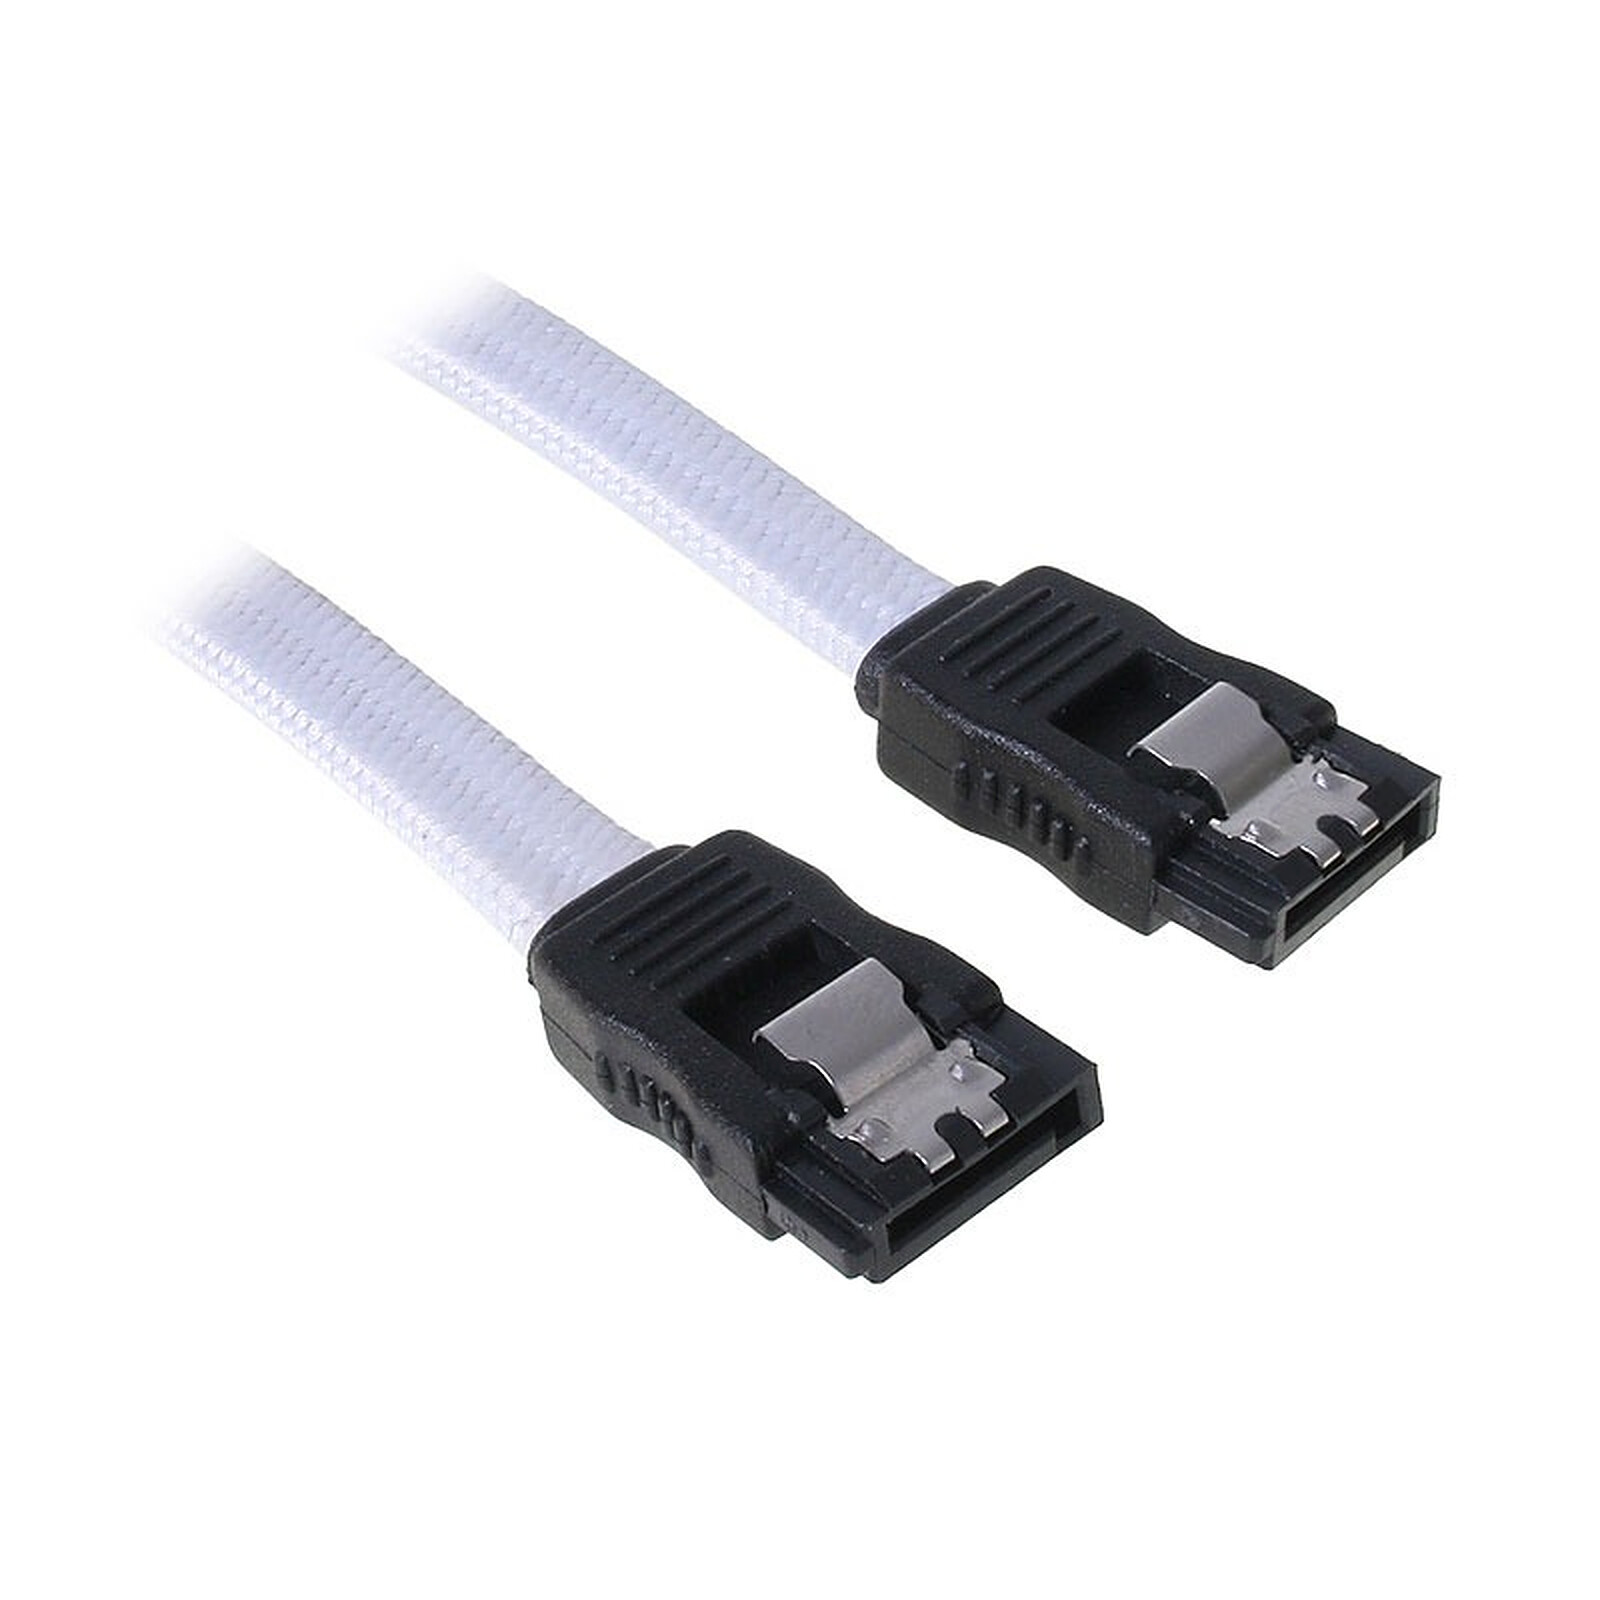 Cable SATA (1 m) - Serial ATA - LDLC